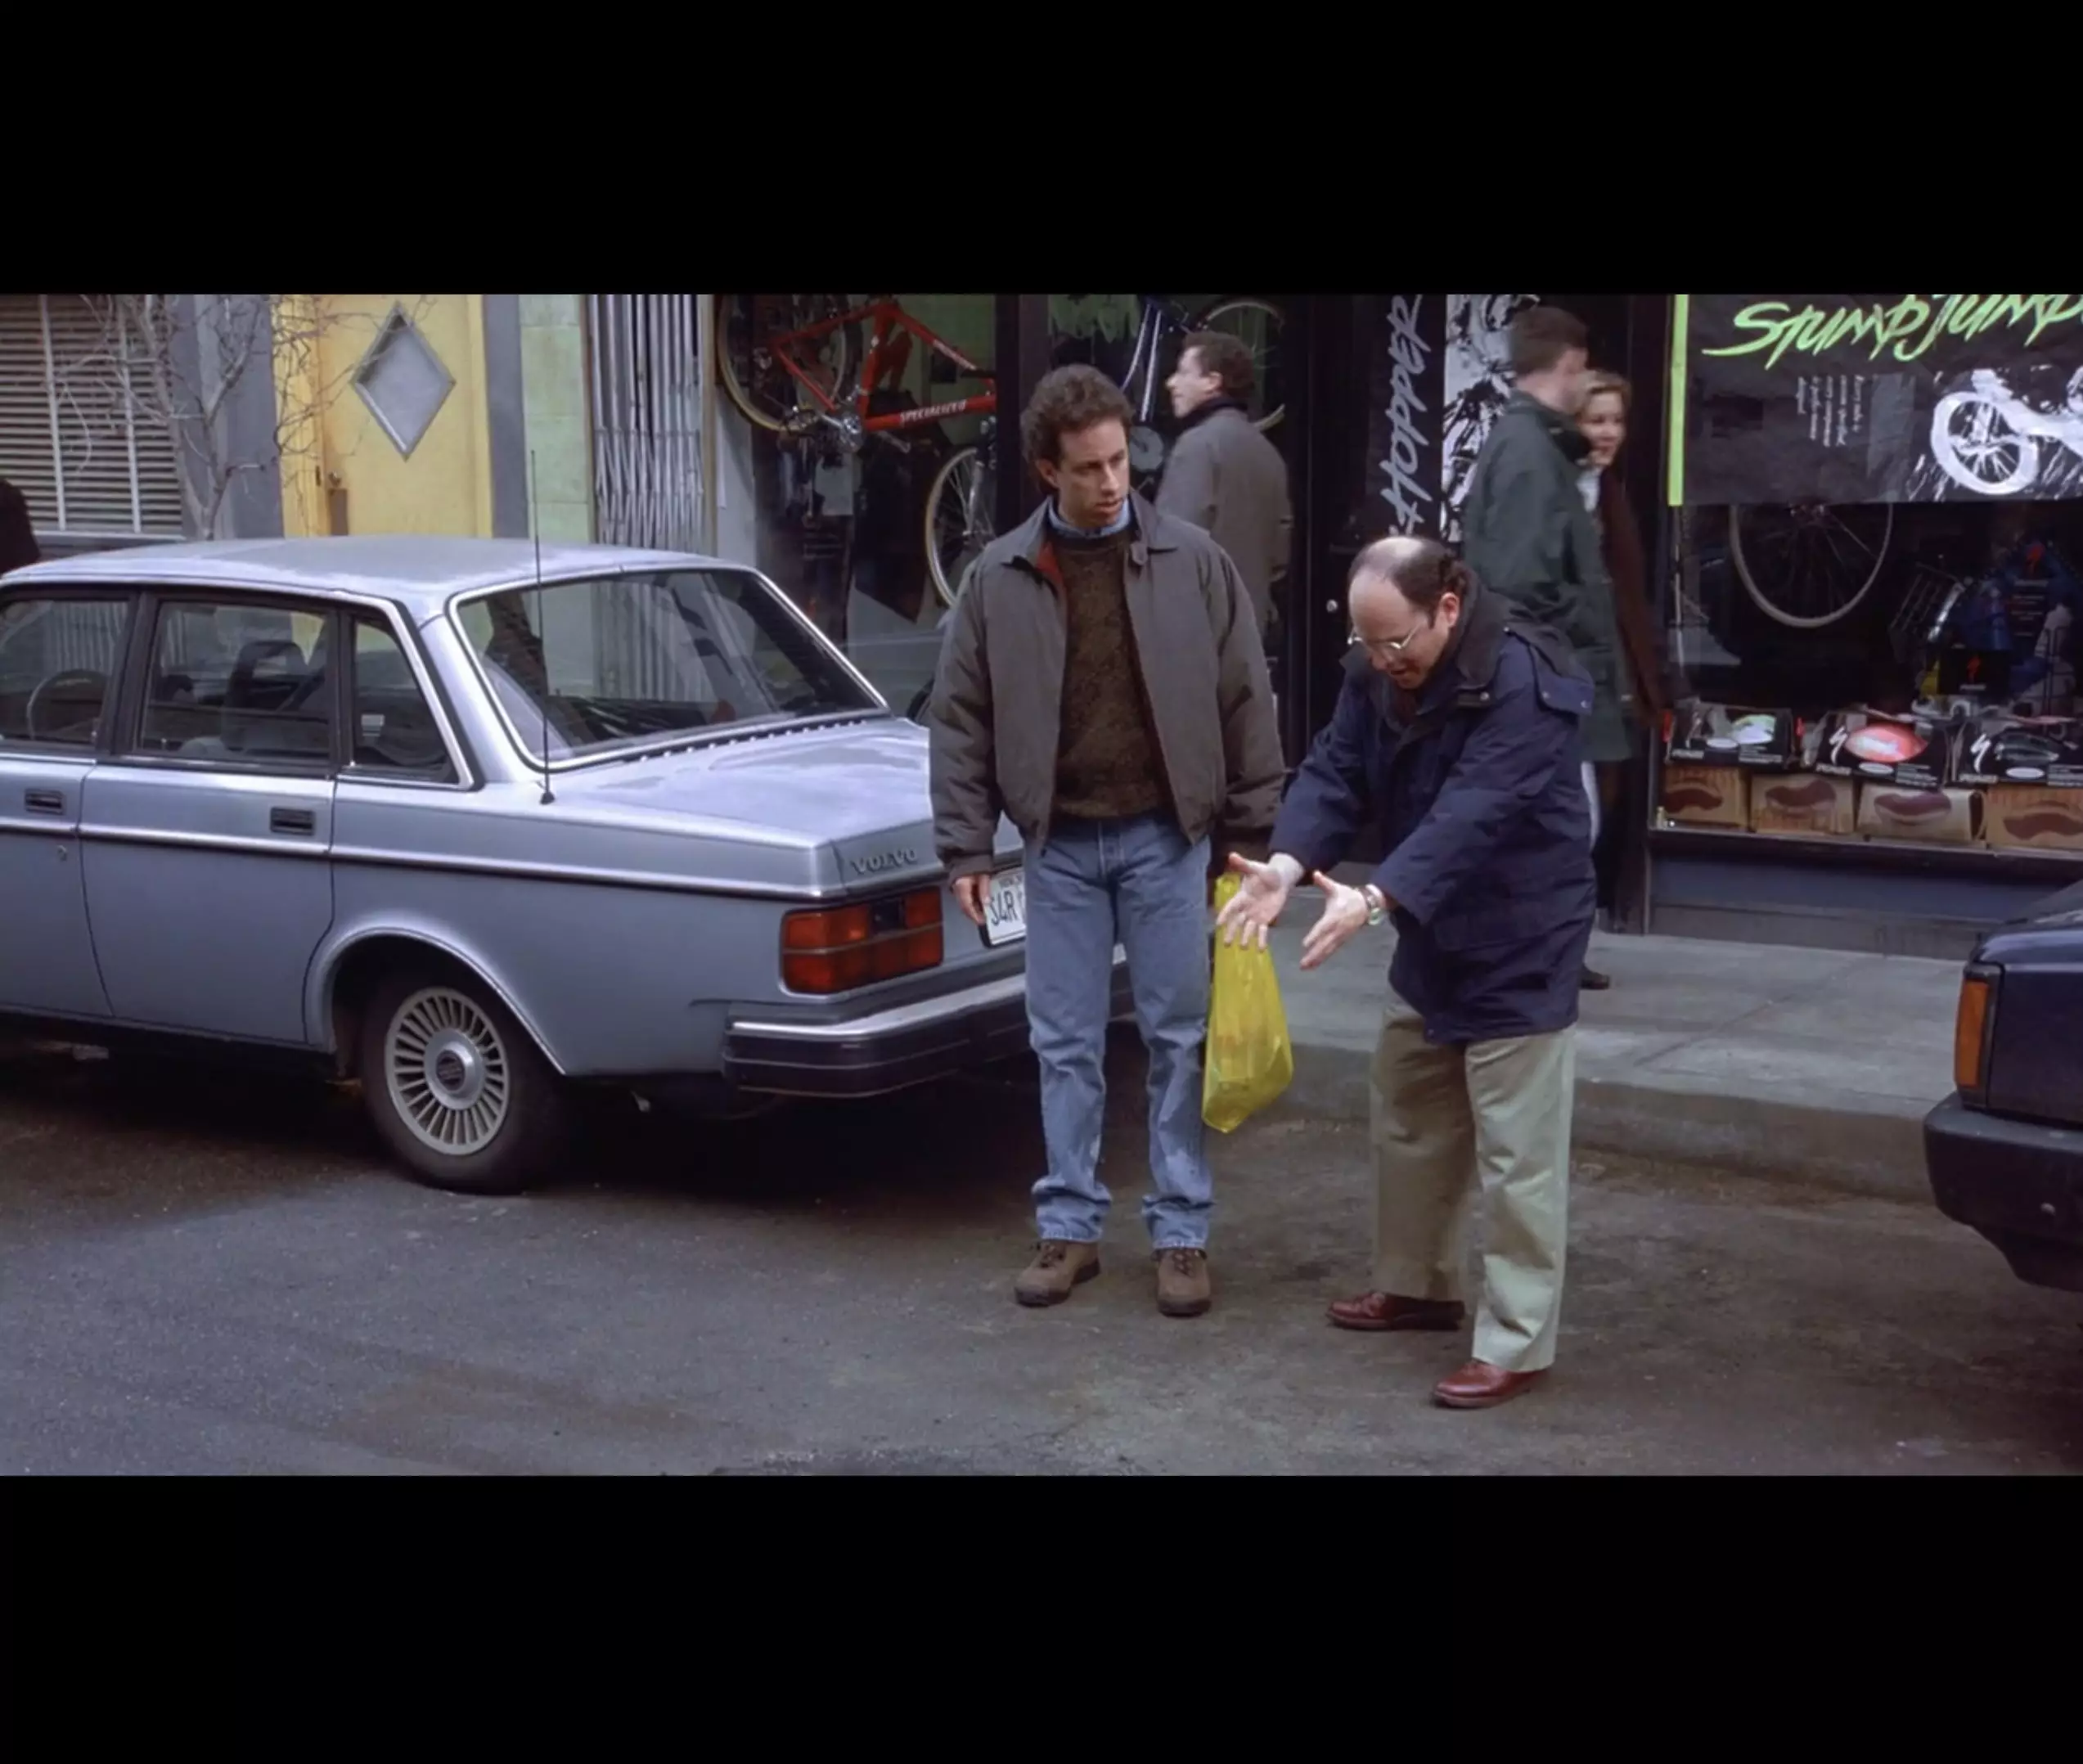 Seinfeld episode 'The Pothole', sans pothole.